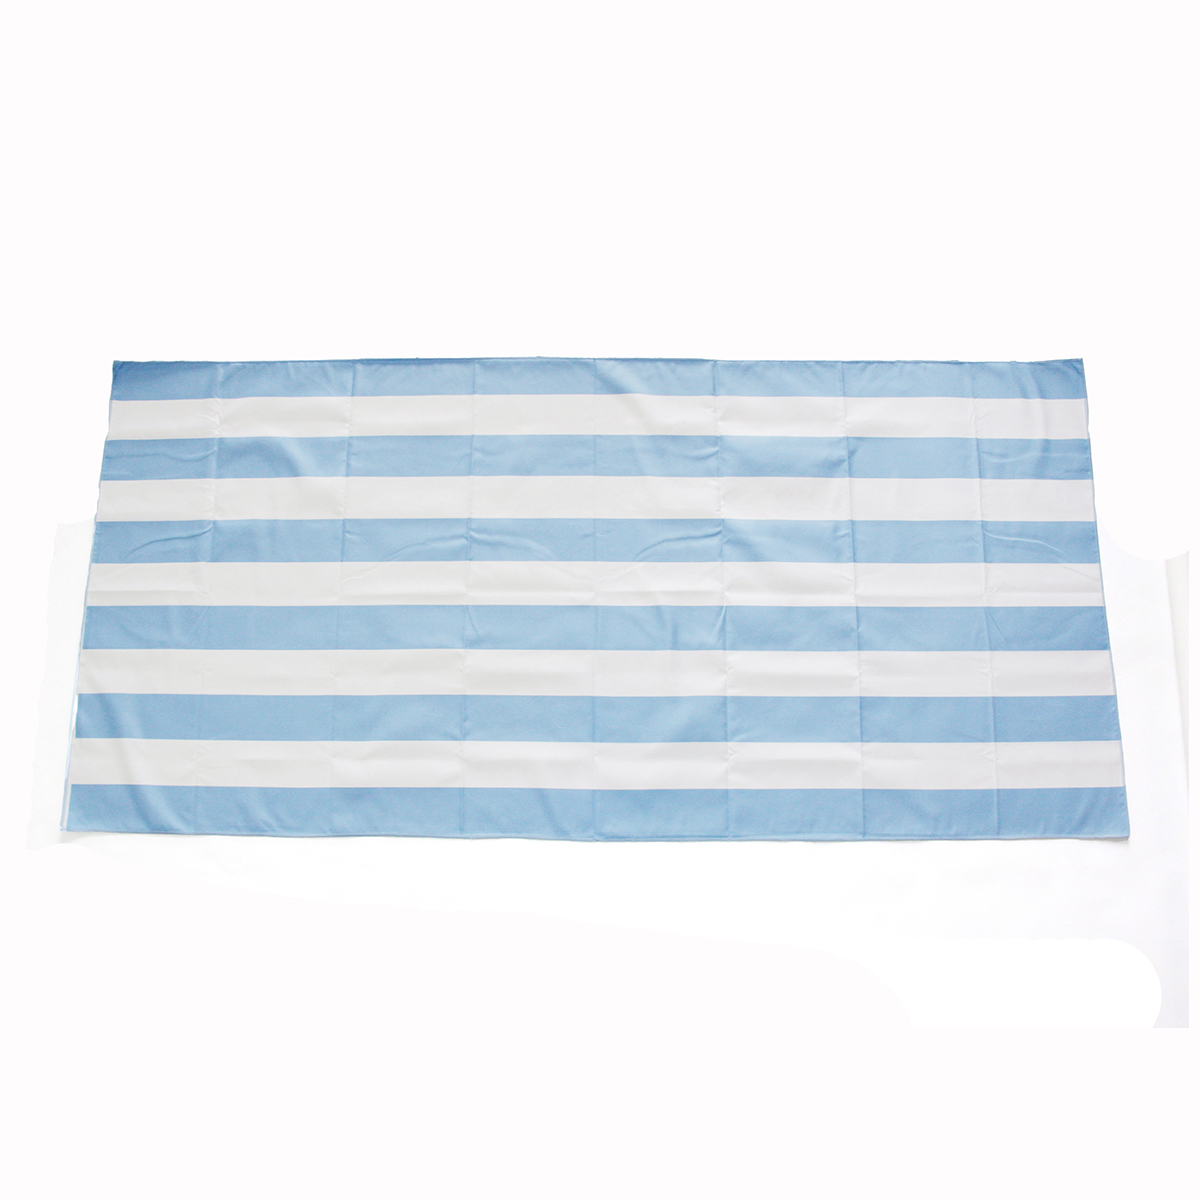 Wholesale Cheap Price Popular Microfiber Beach Towel Promotion Travel Towel